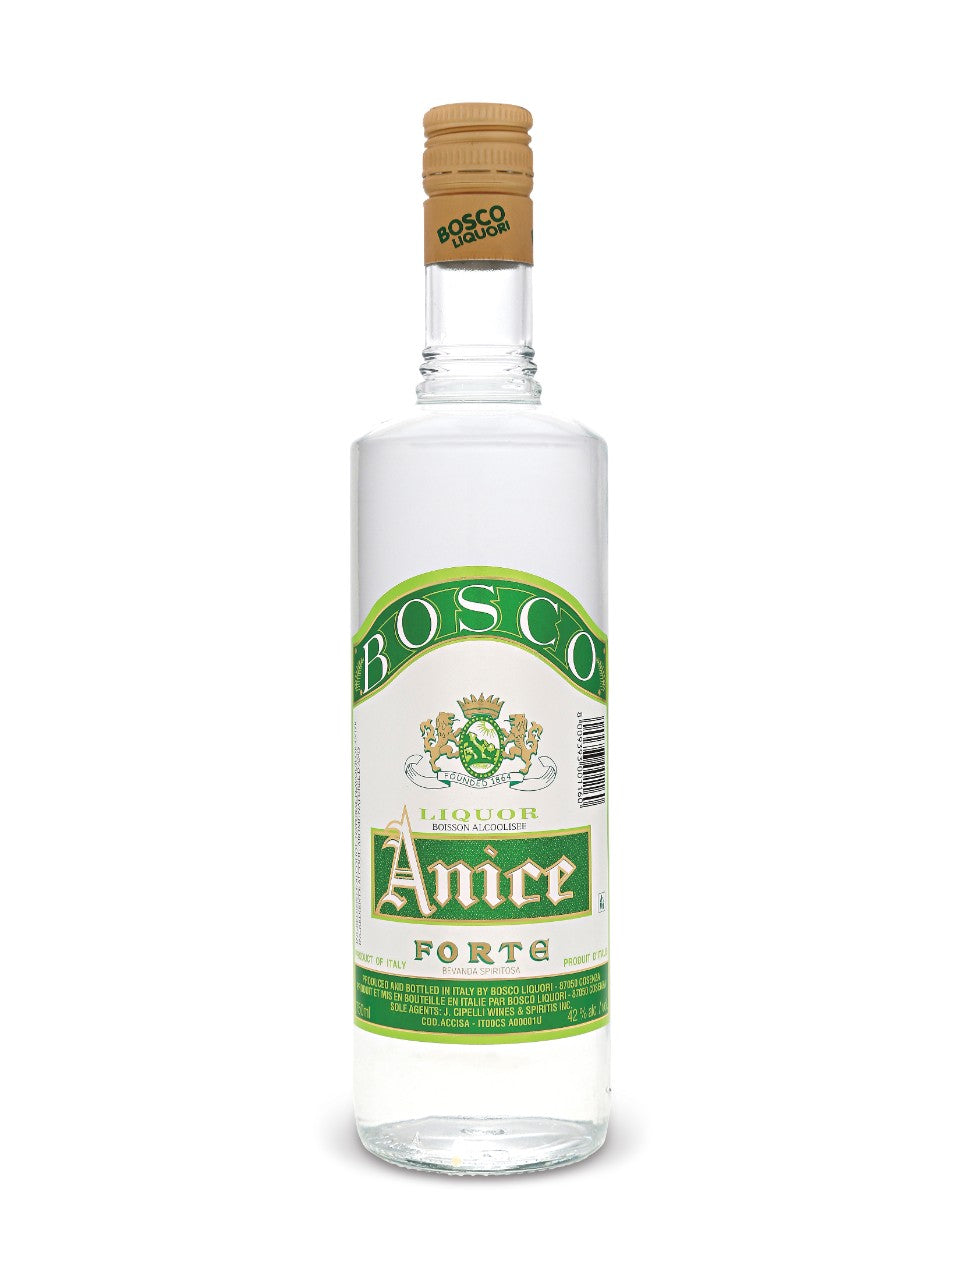 Bosco Anice 750 mL bottle